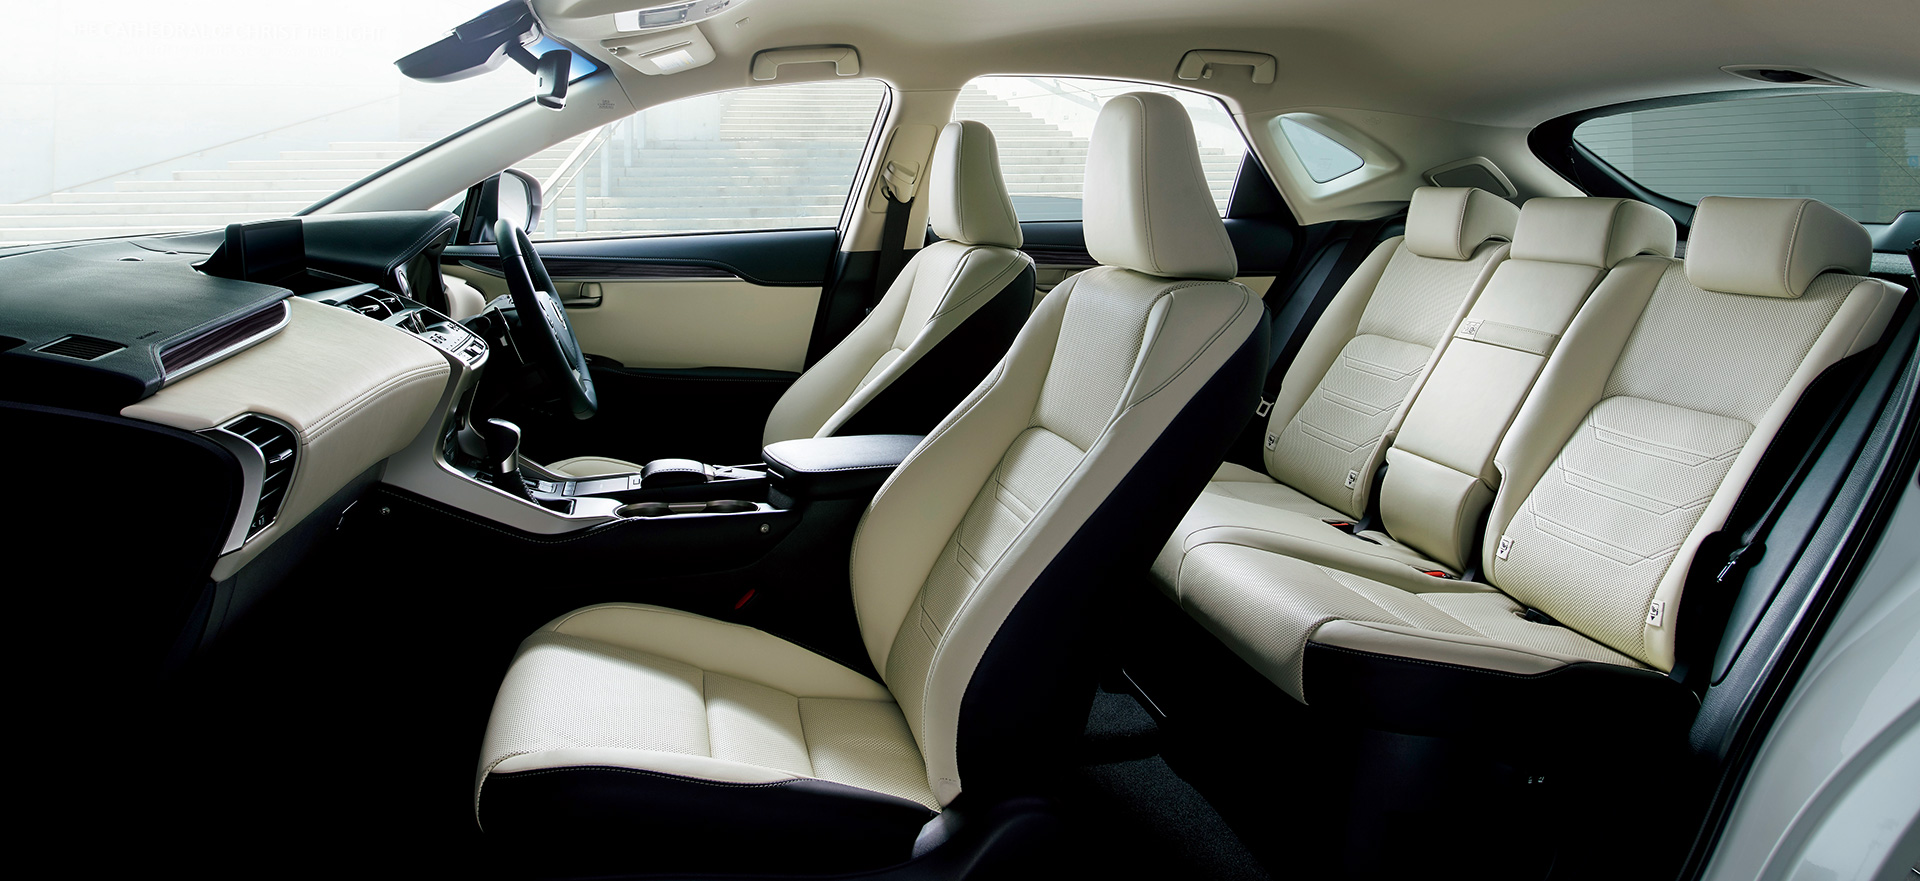 Nx300h Version L インテリアカラー リッチクリーム オプション装着車 トヨタ自動車株式会社 公式企業サイト